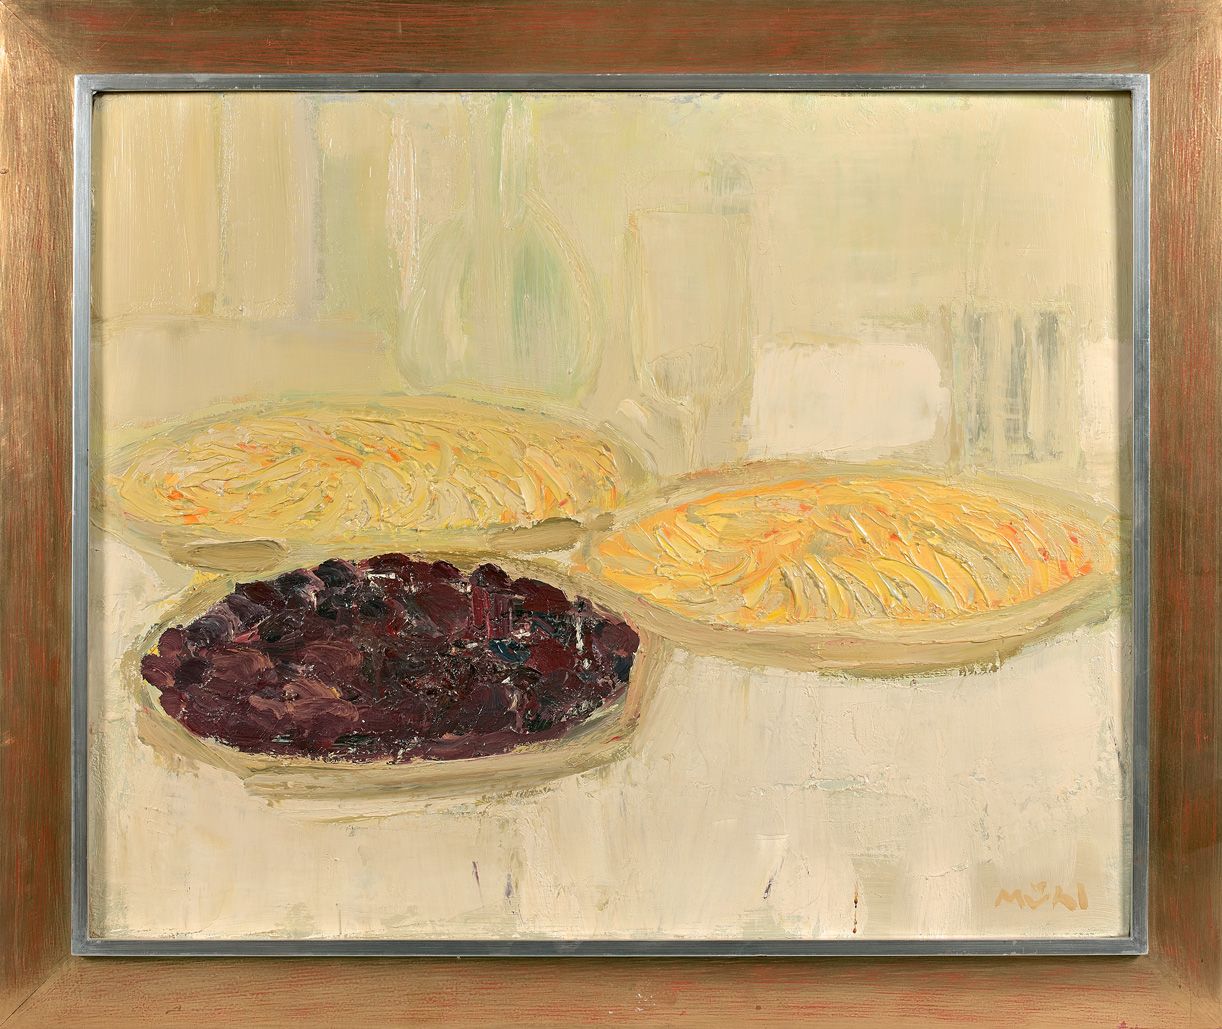 MÜHL Roger MÜHL (1929-2008)

Crostate di frutta

Tela firmata in basso a destra,&hellip;